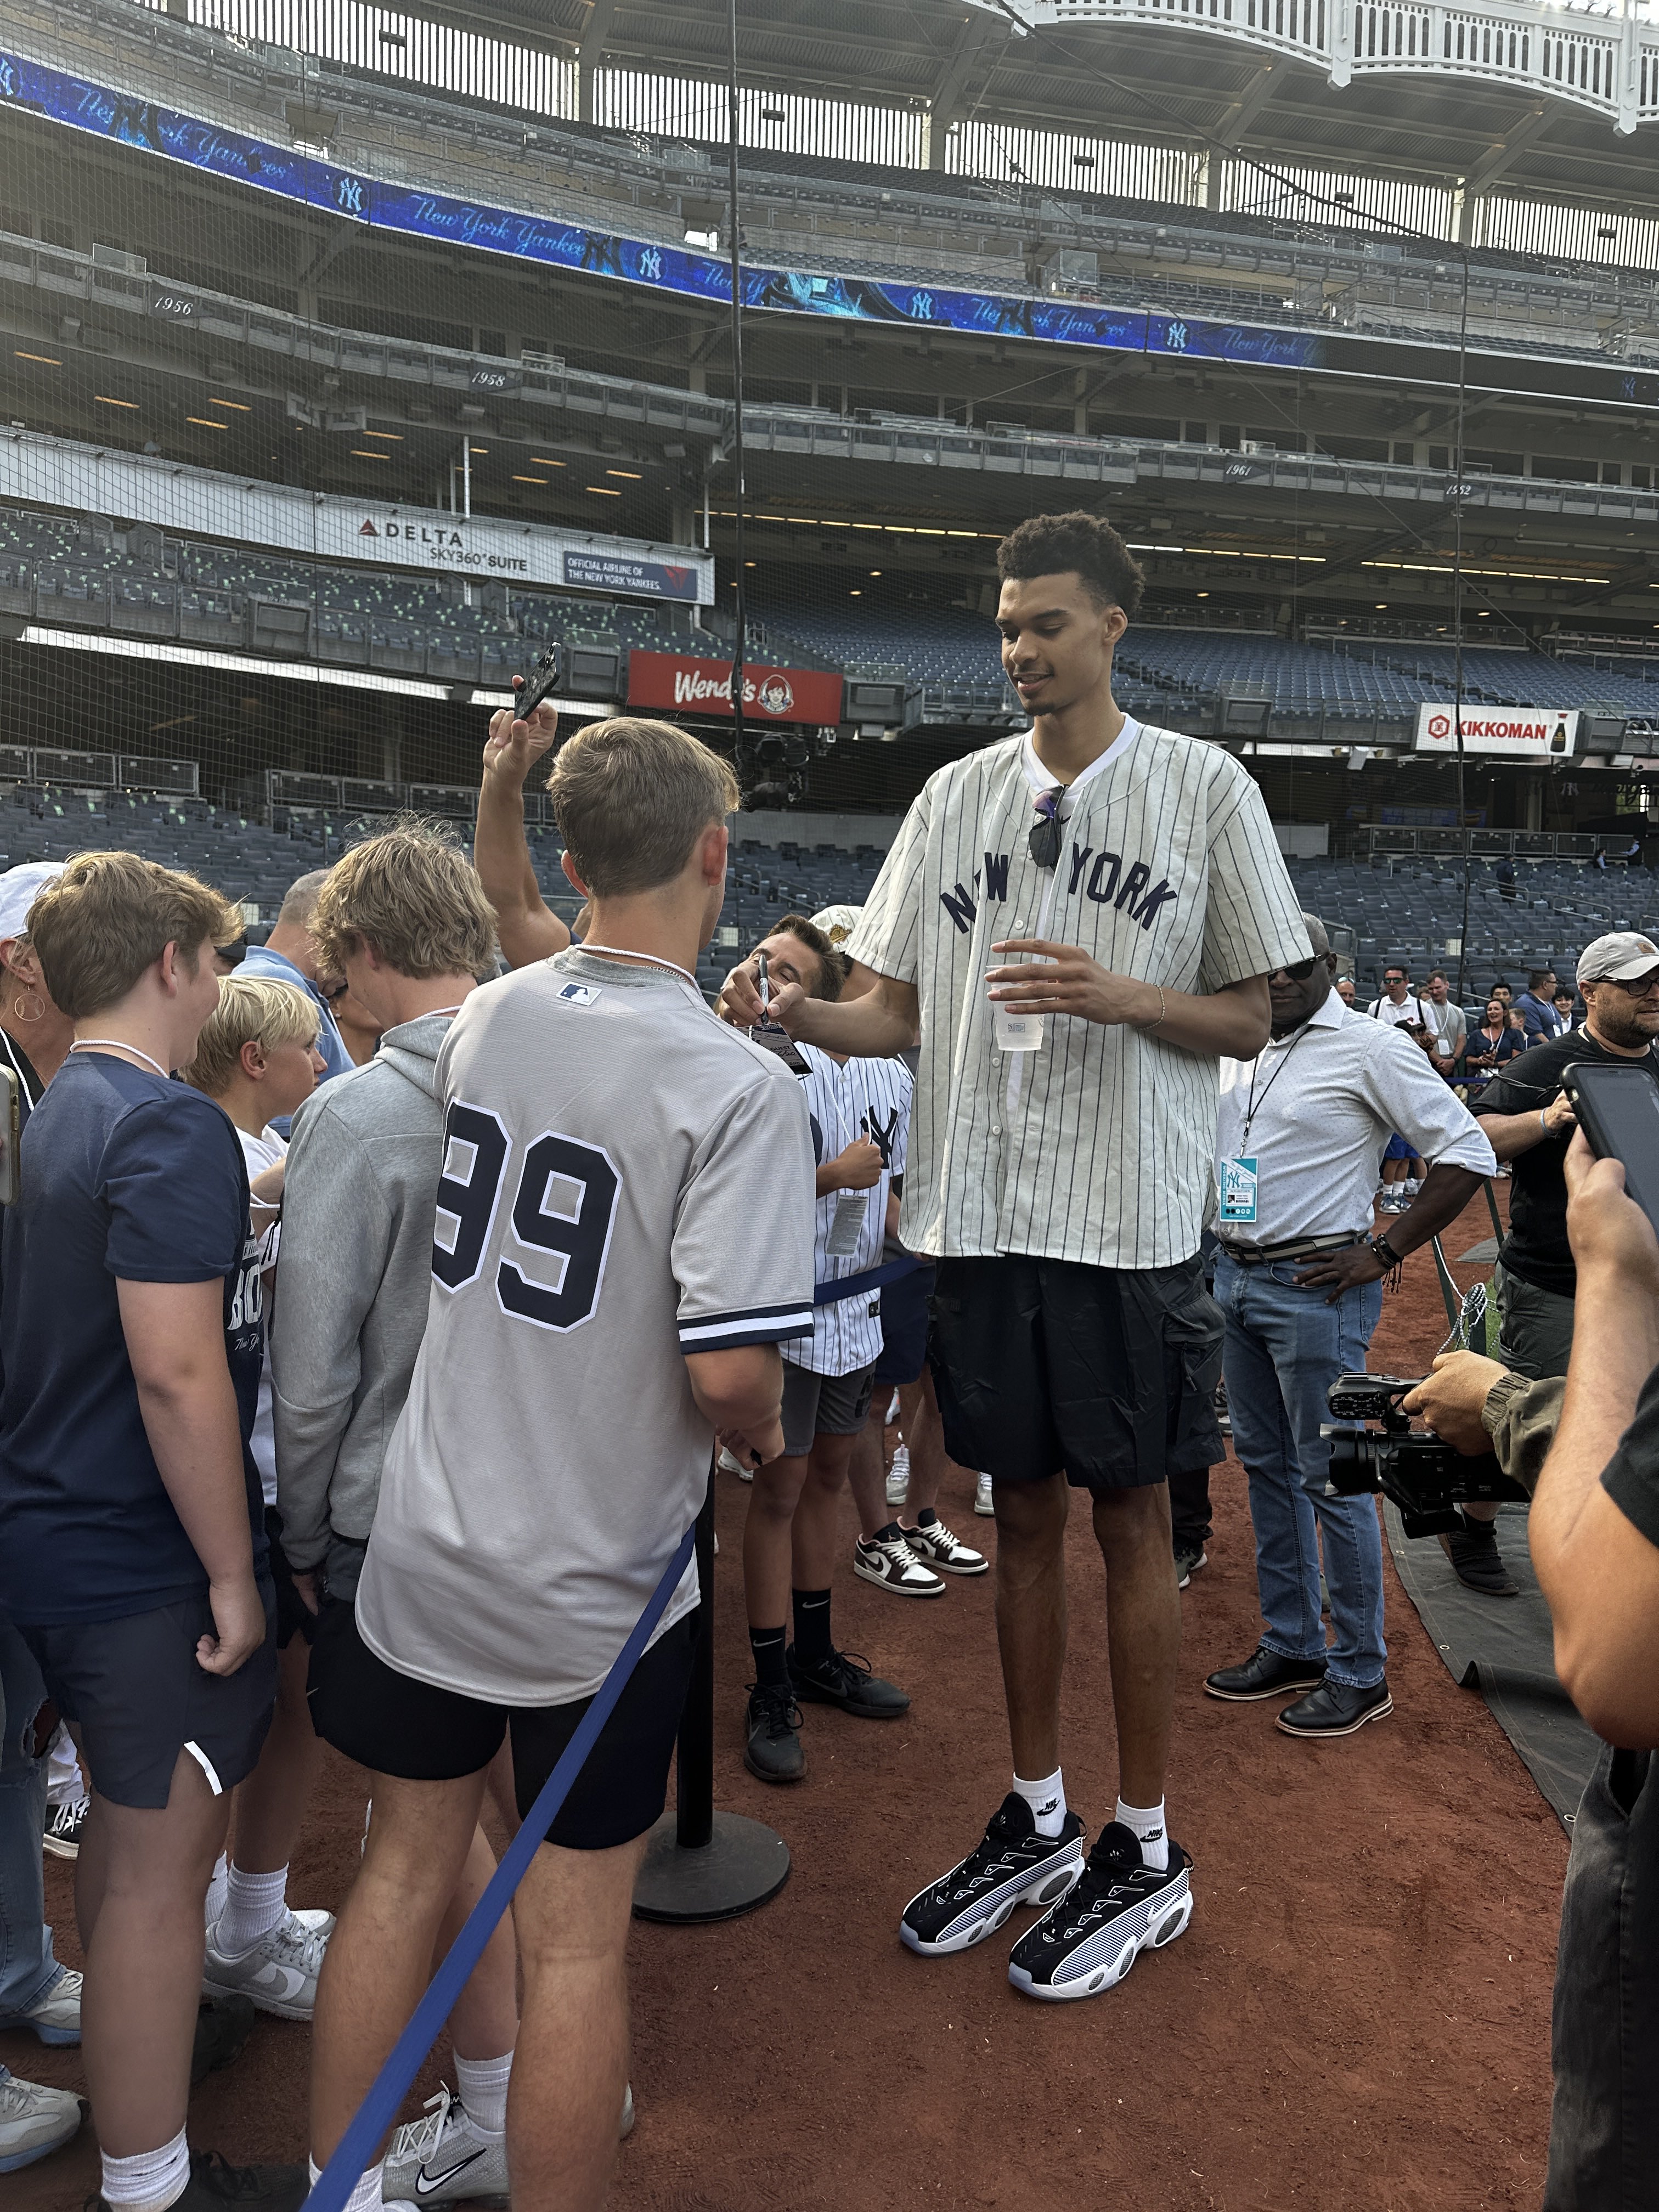 Joon Lee on X: "Victor Wembanyama is at Yankee Stadium, and he's tall  https://t.co/u1N1WX493d" / X